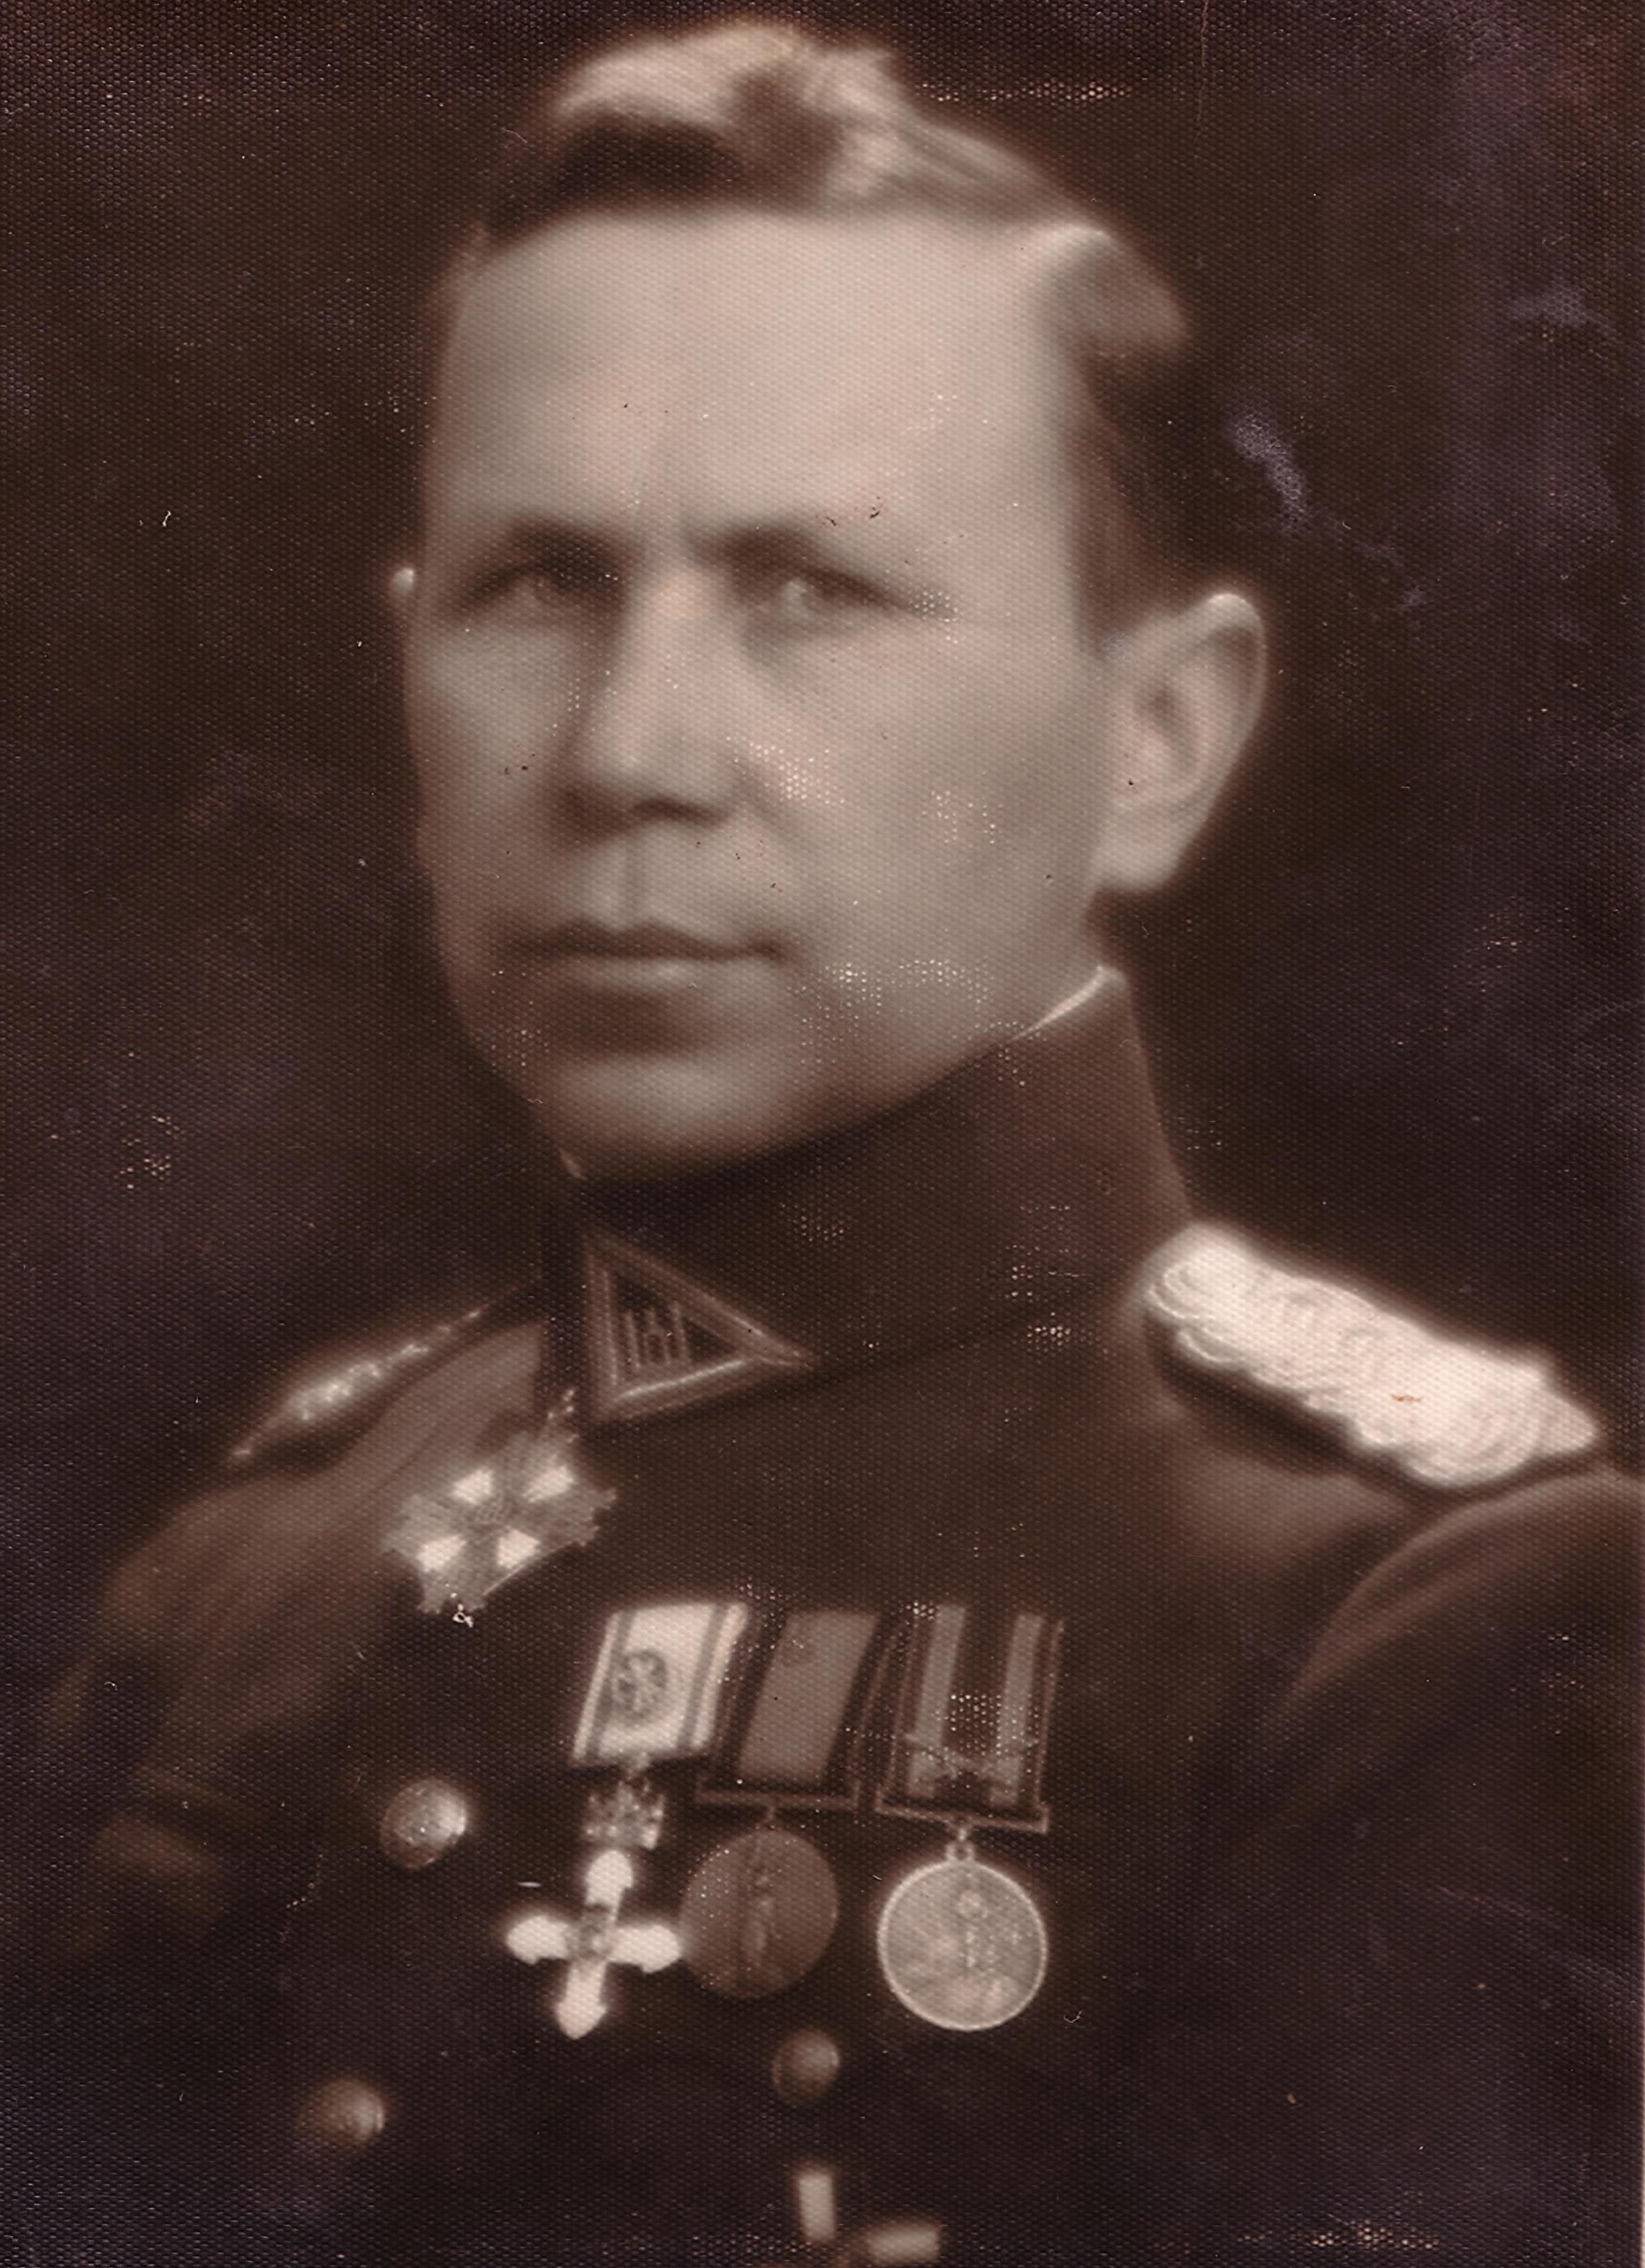 Полковник Пранас Саладжюс